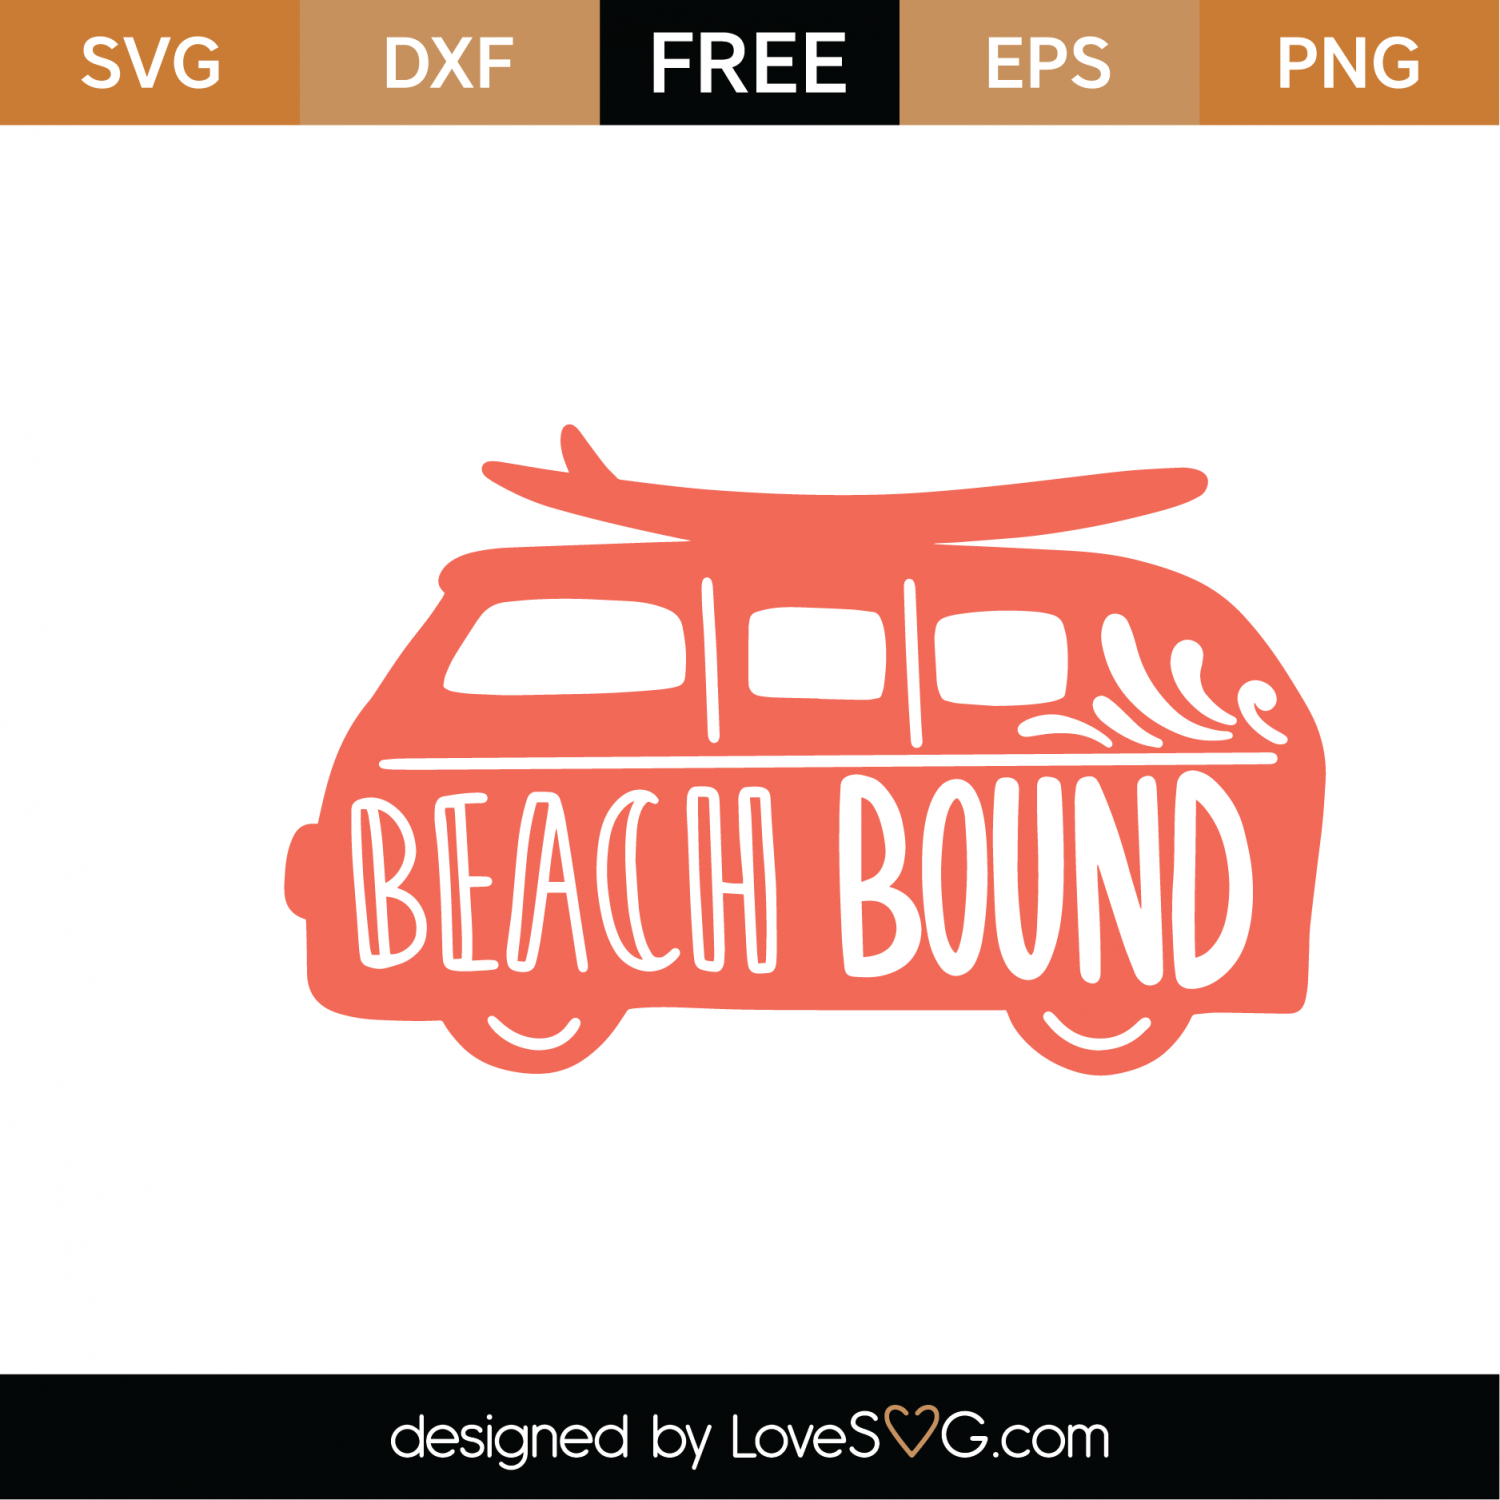 Download Free Beach Bound SVG Cut File | Lovesvg.com